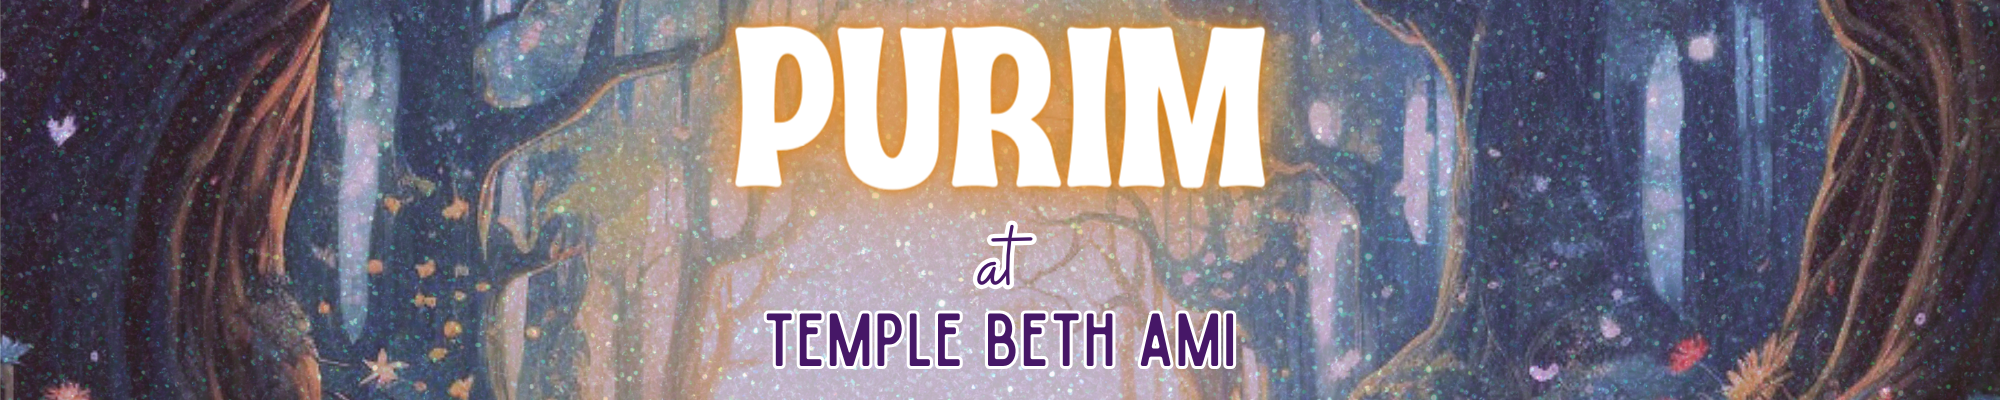 TBA Generic Purim Banner (2000 x 400 px)